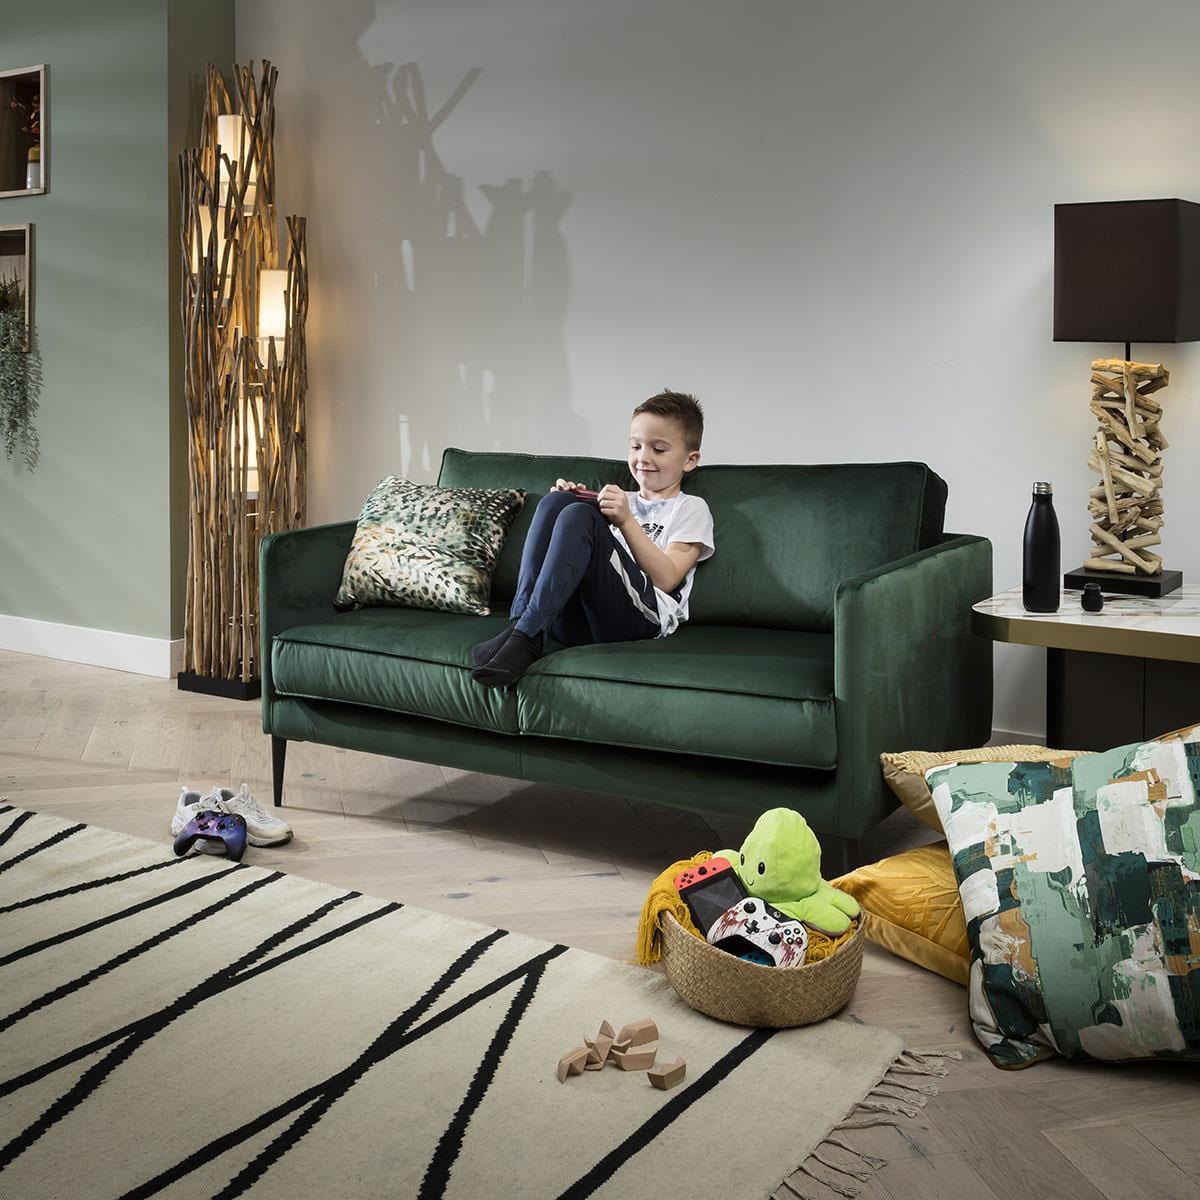 Quatropi Luxury 2 Seater Sofa - Upholstered Modern Design - Choose Your Fabric - 150cm